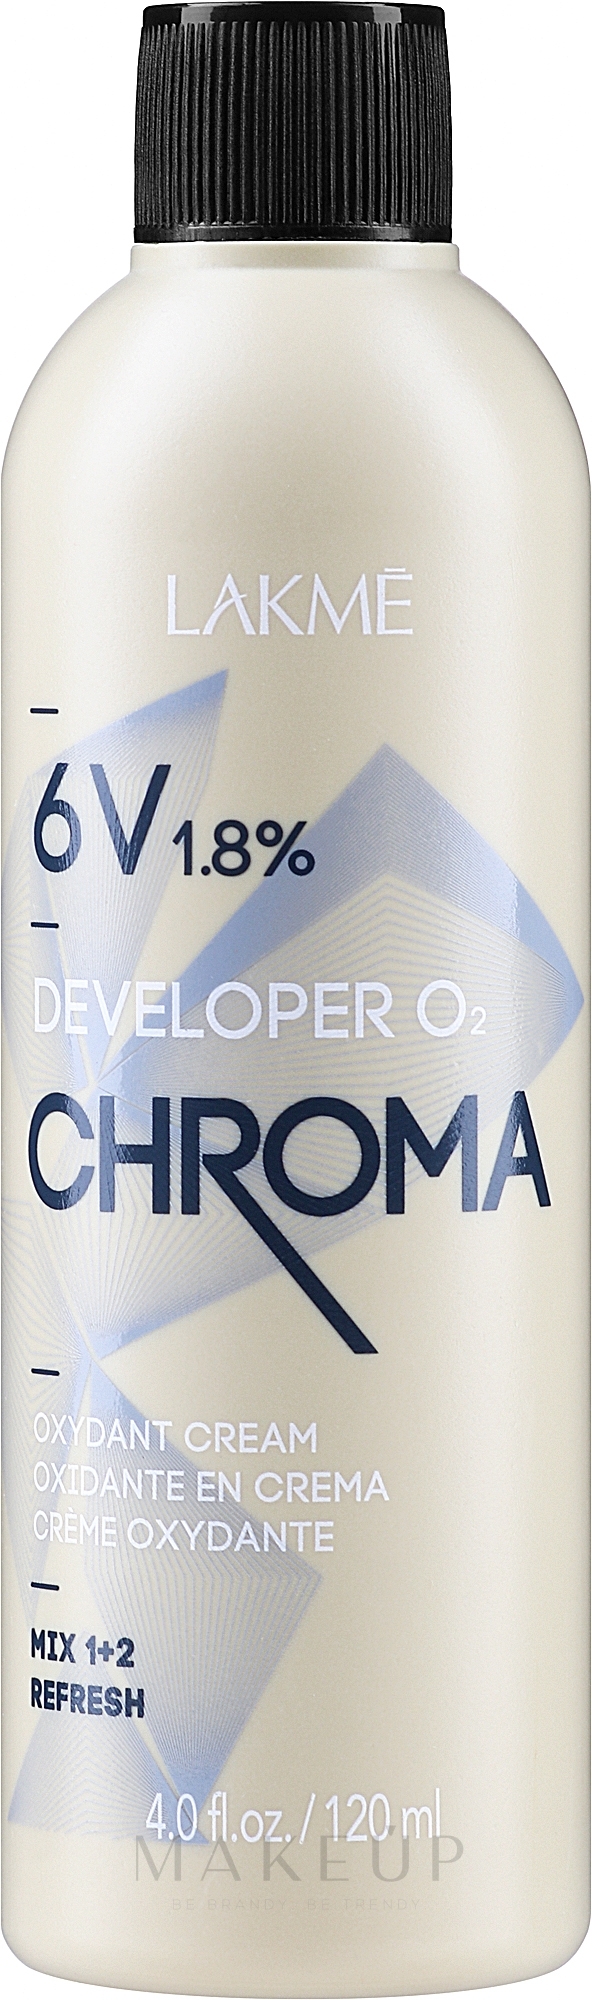 Creme-Oxidationsmittel - Lakme Chroma Developer 02 6V (1,8%) — Bild 120 ml